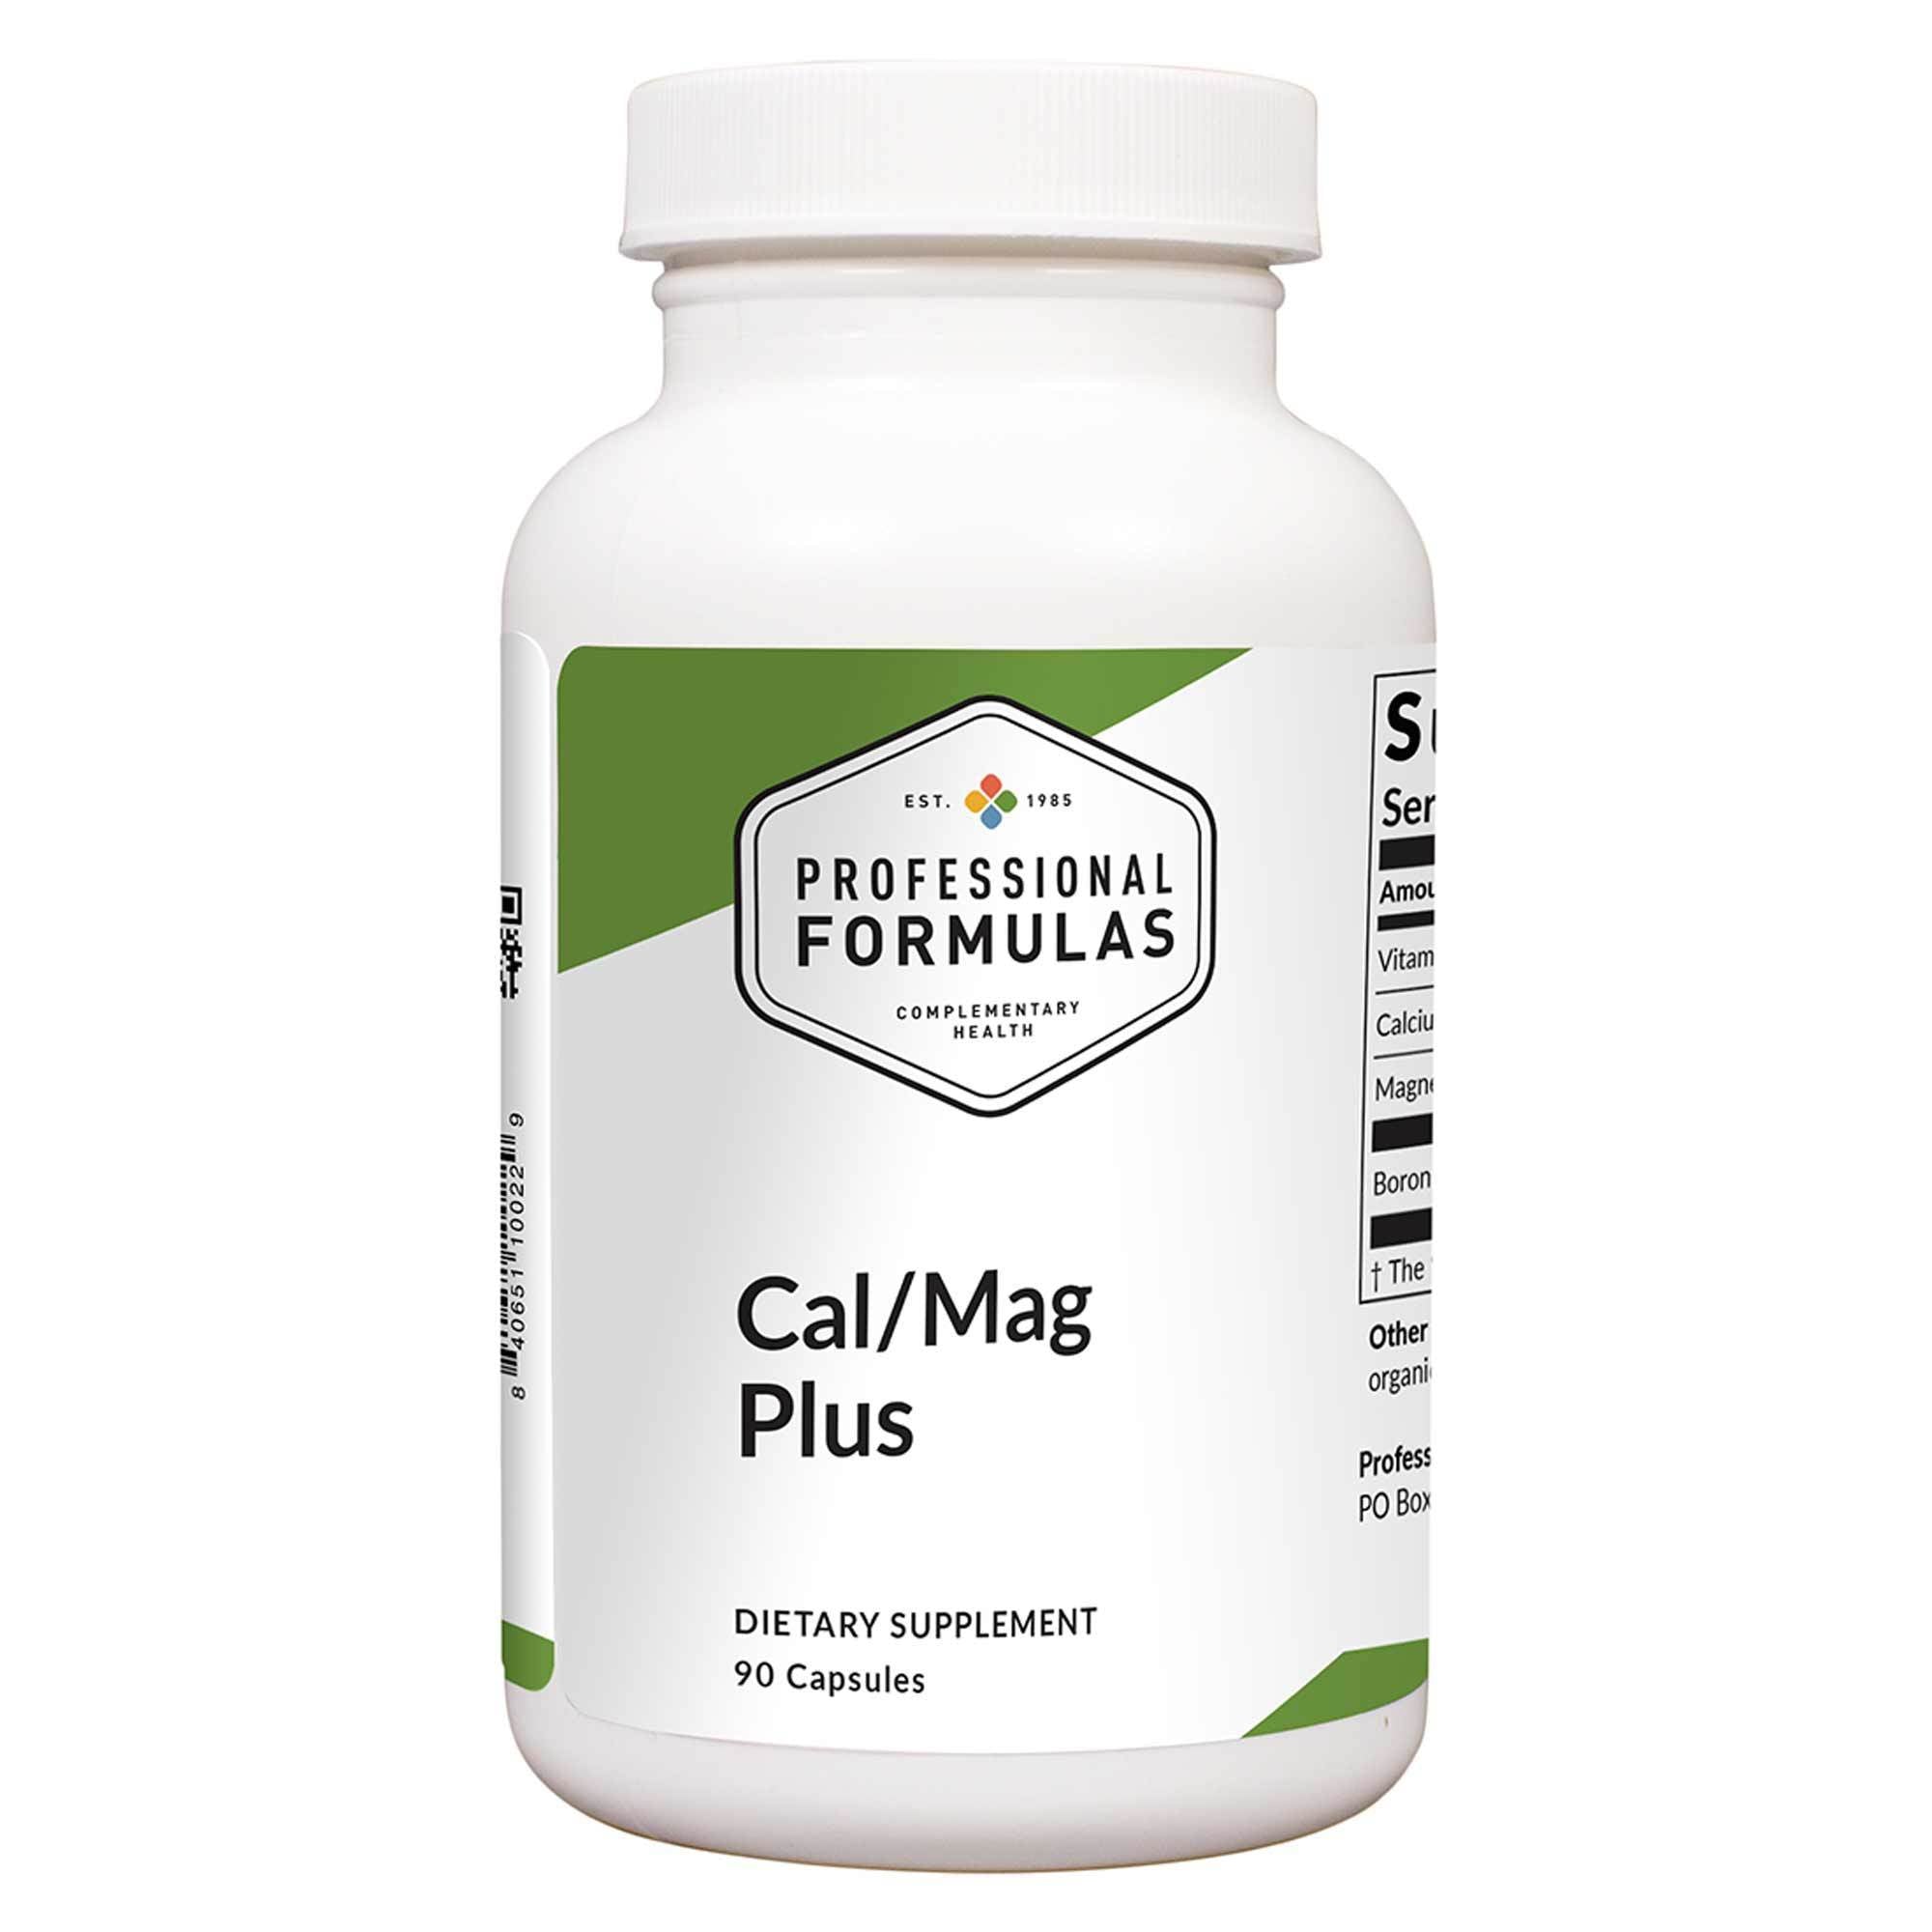 Professional Formulas Cal/Mag Plus Caps 90 Capsules - 2 Pack